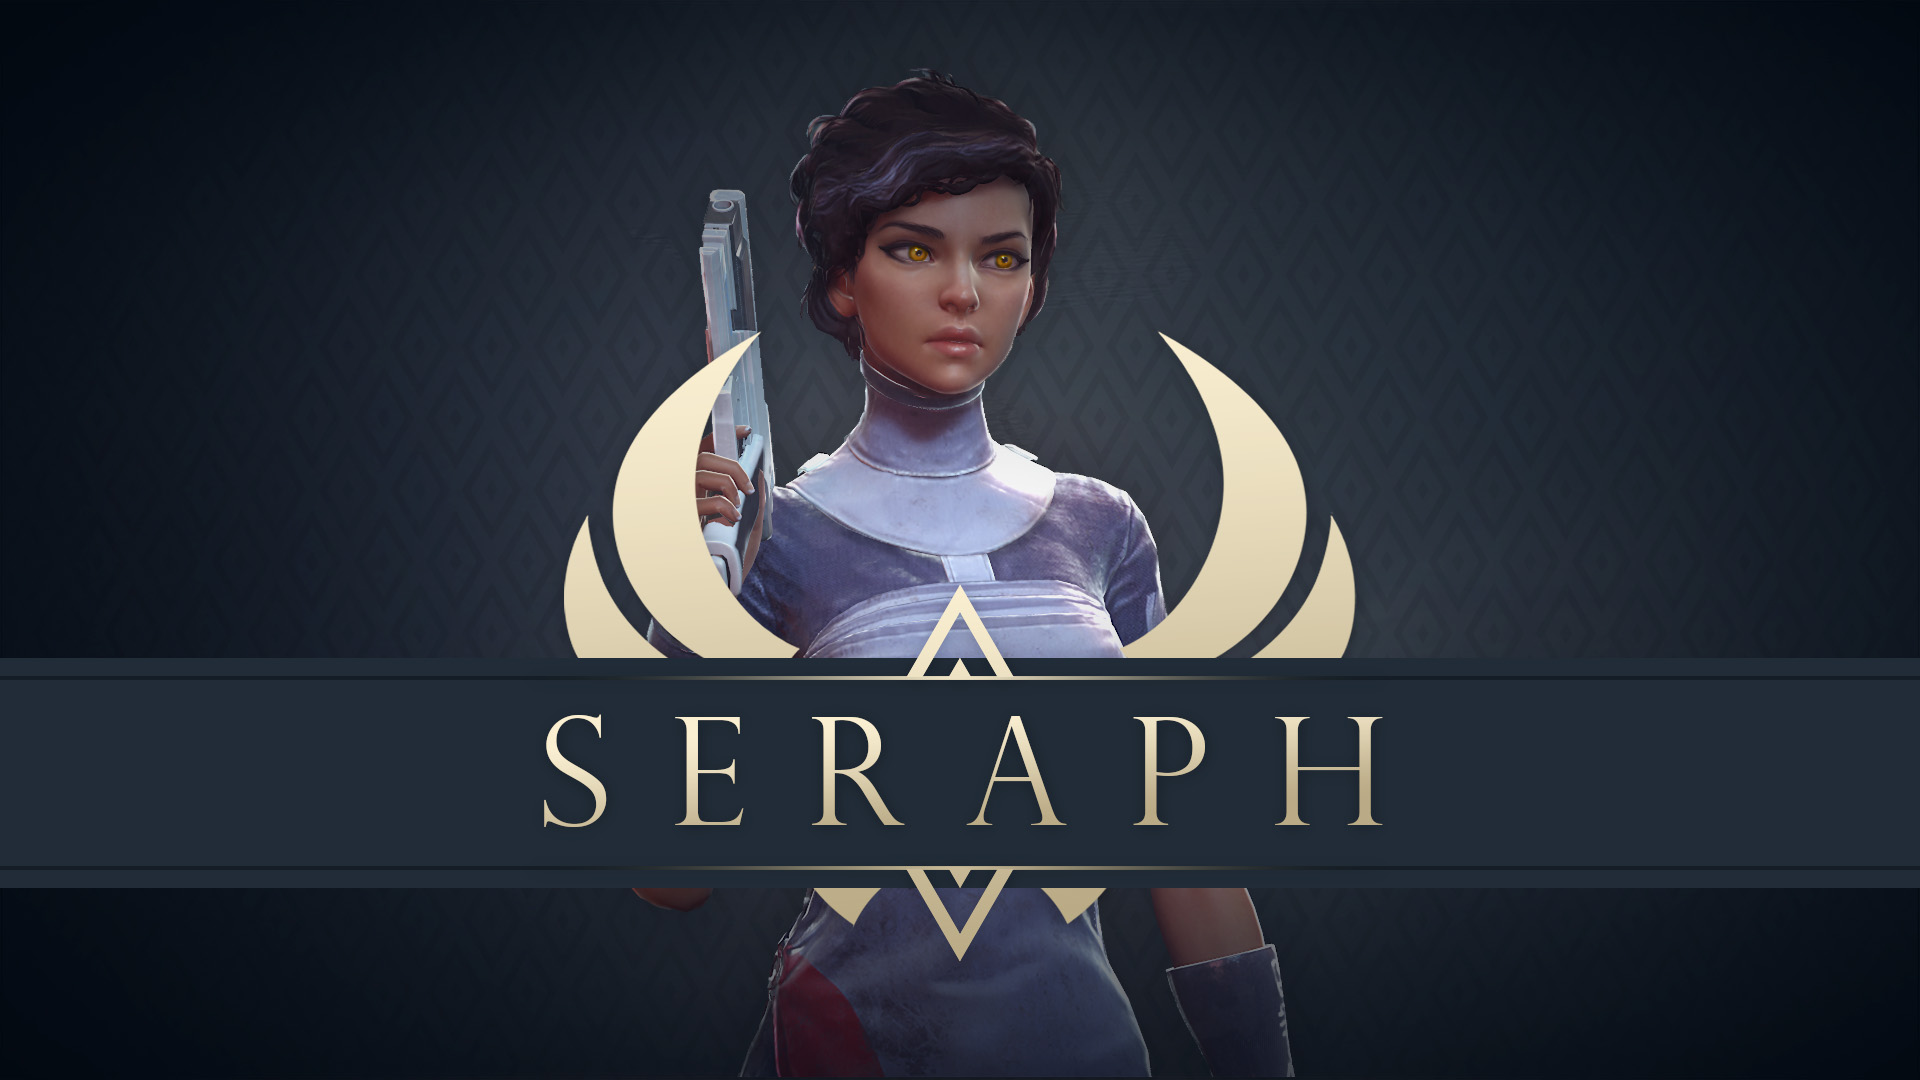 Seraph - Soundtrack (OST) Featured Screenshot #1